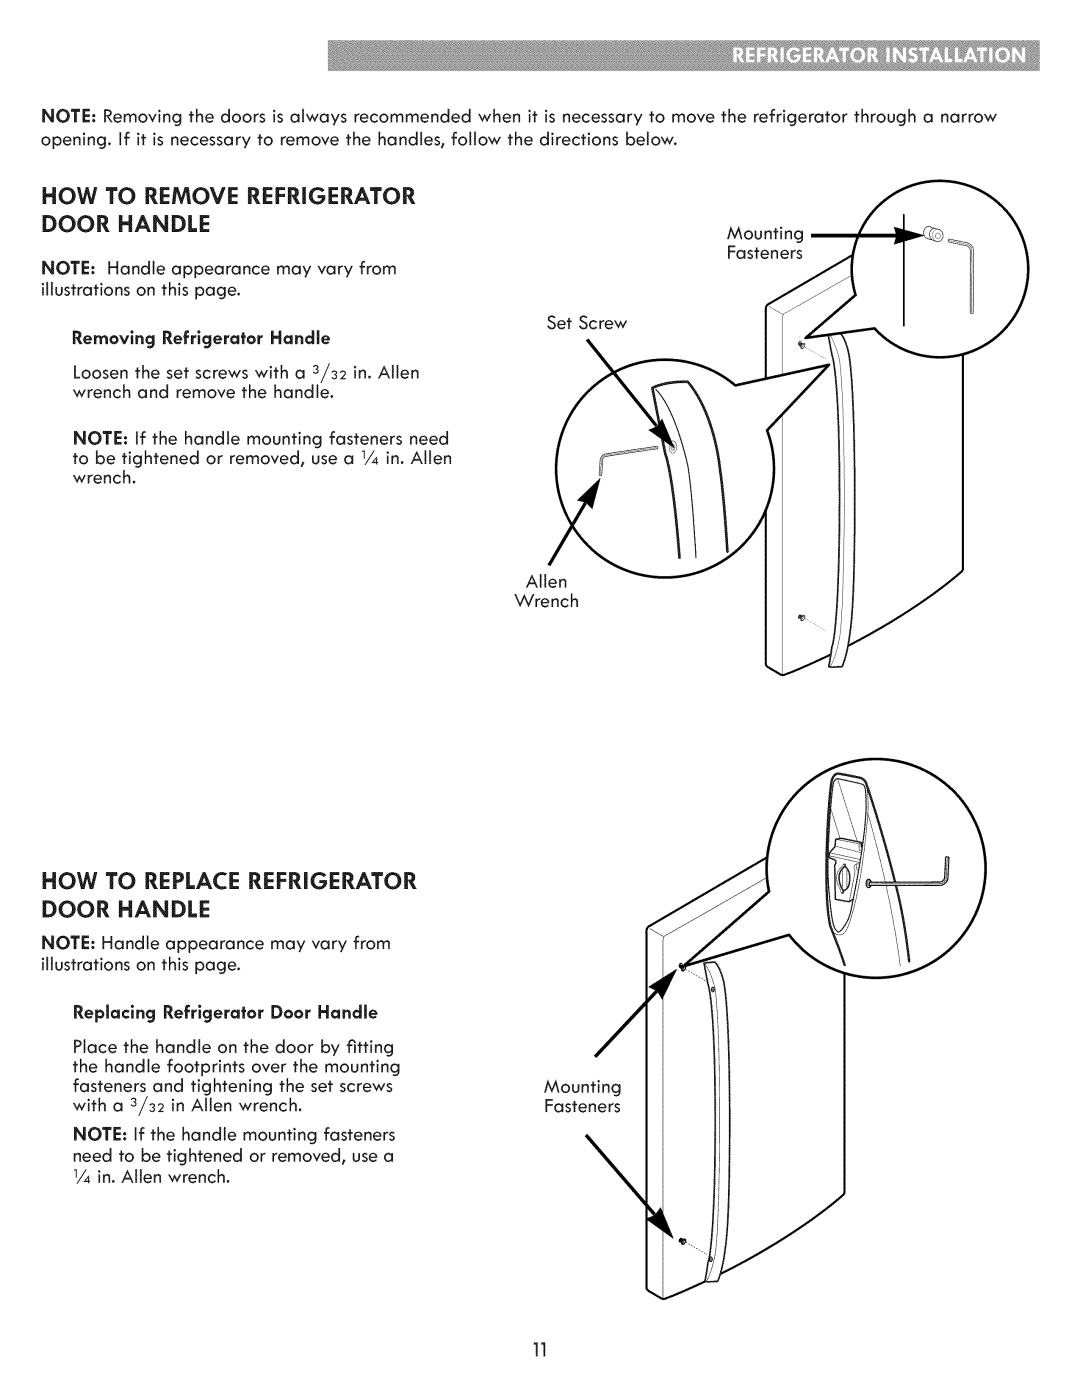 Kenmore 795.7202 manual How To Remove Refrigerator Door Handle, How To Replace Refrigerator, Removing Refrigerator Handle 